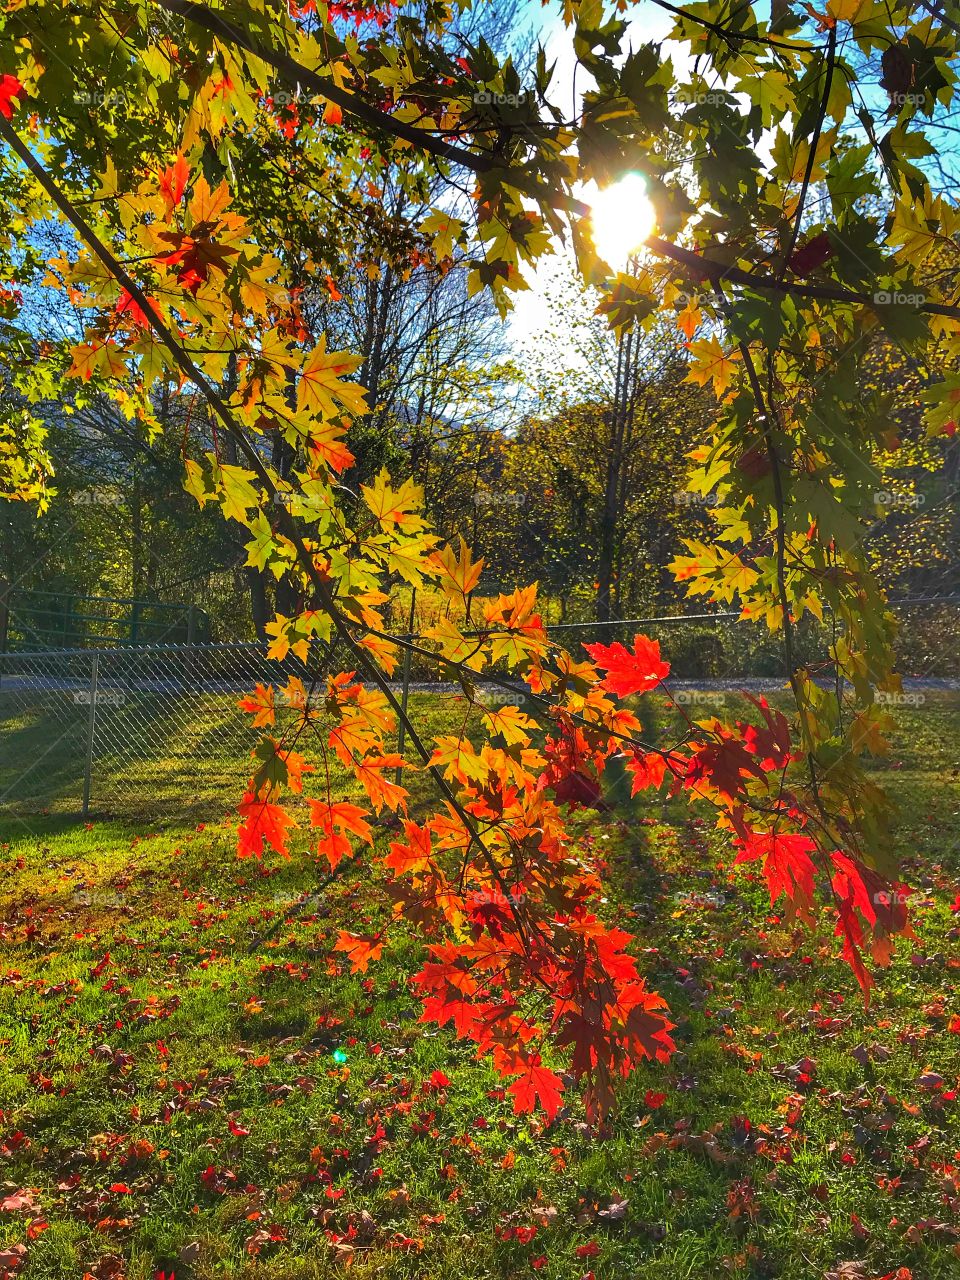 An Autumn branch ablaze with color  